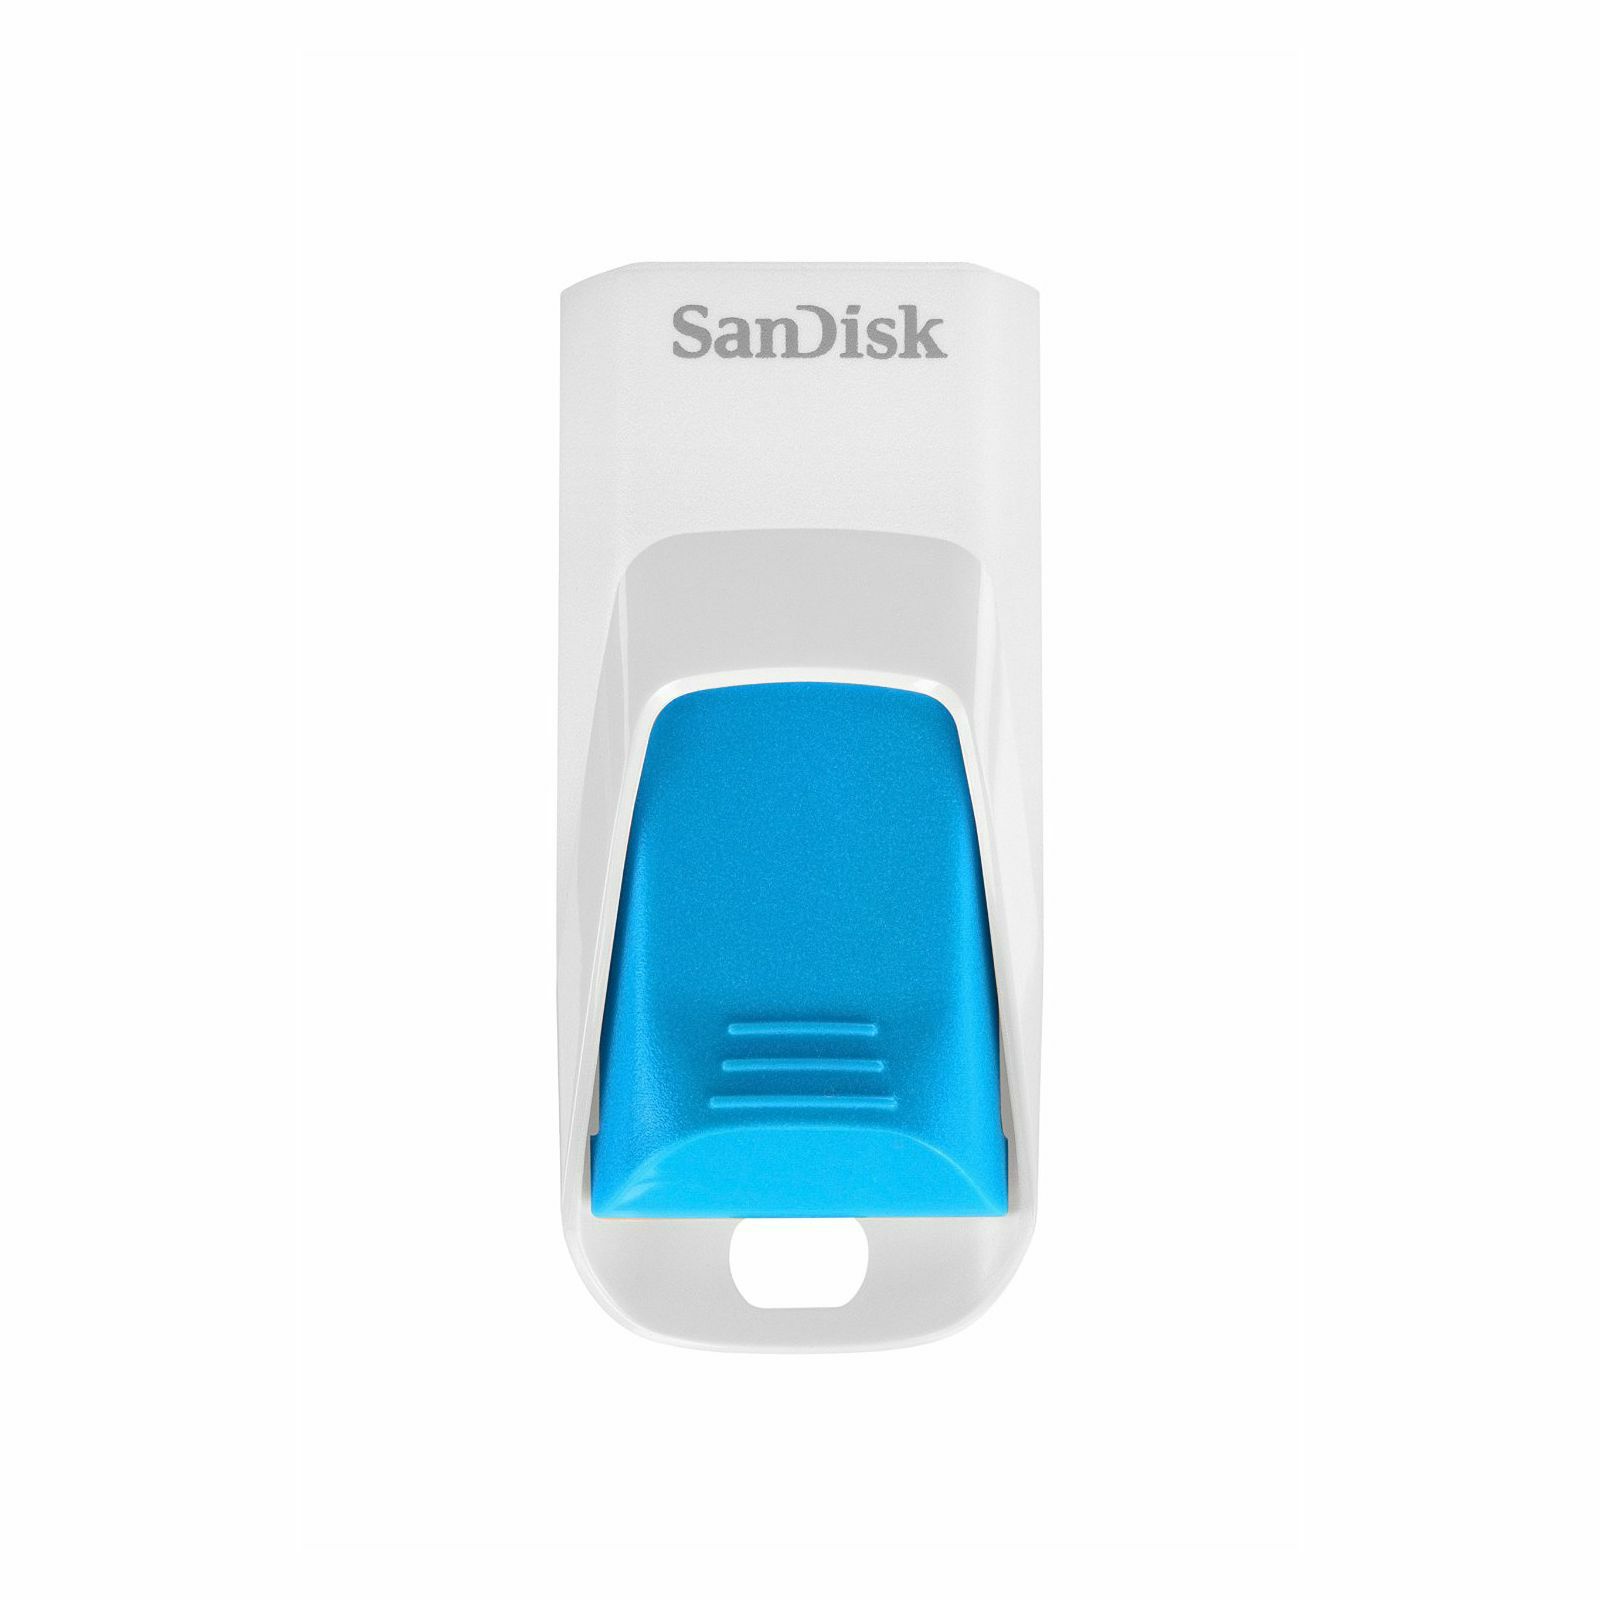 SanDisk Cruzer Edge 32GB White/Blue SDCZ51W-032G-B35B USB Memory Stick